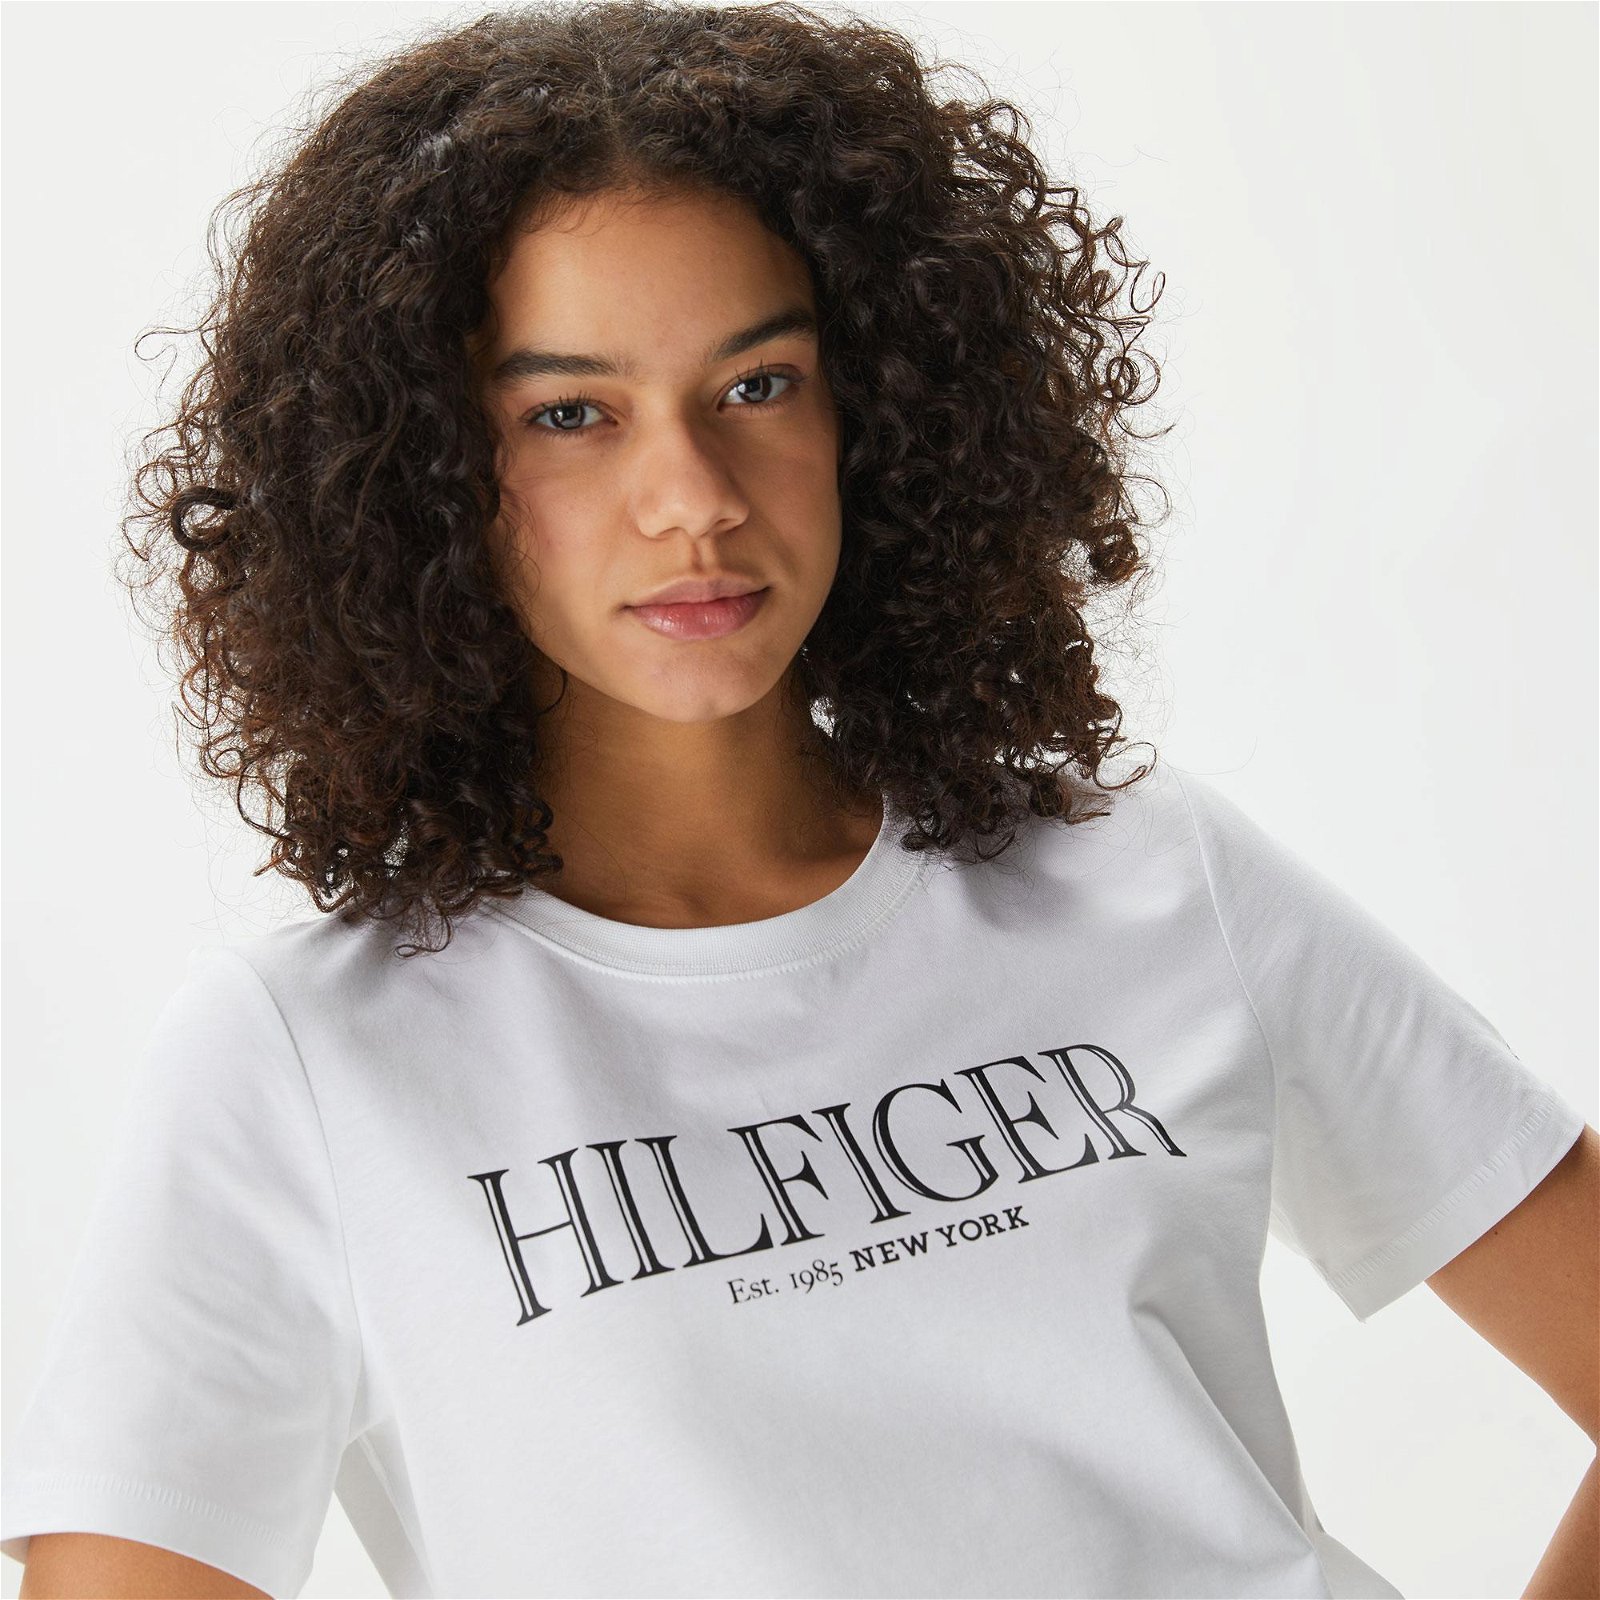 Tommy Hilfiger Reg Kadın Beyaz T-Shirt